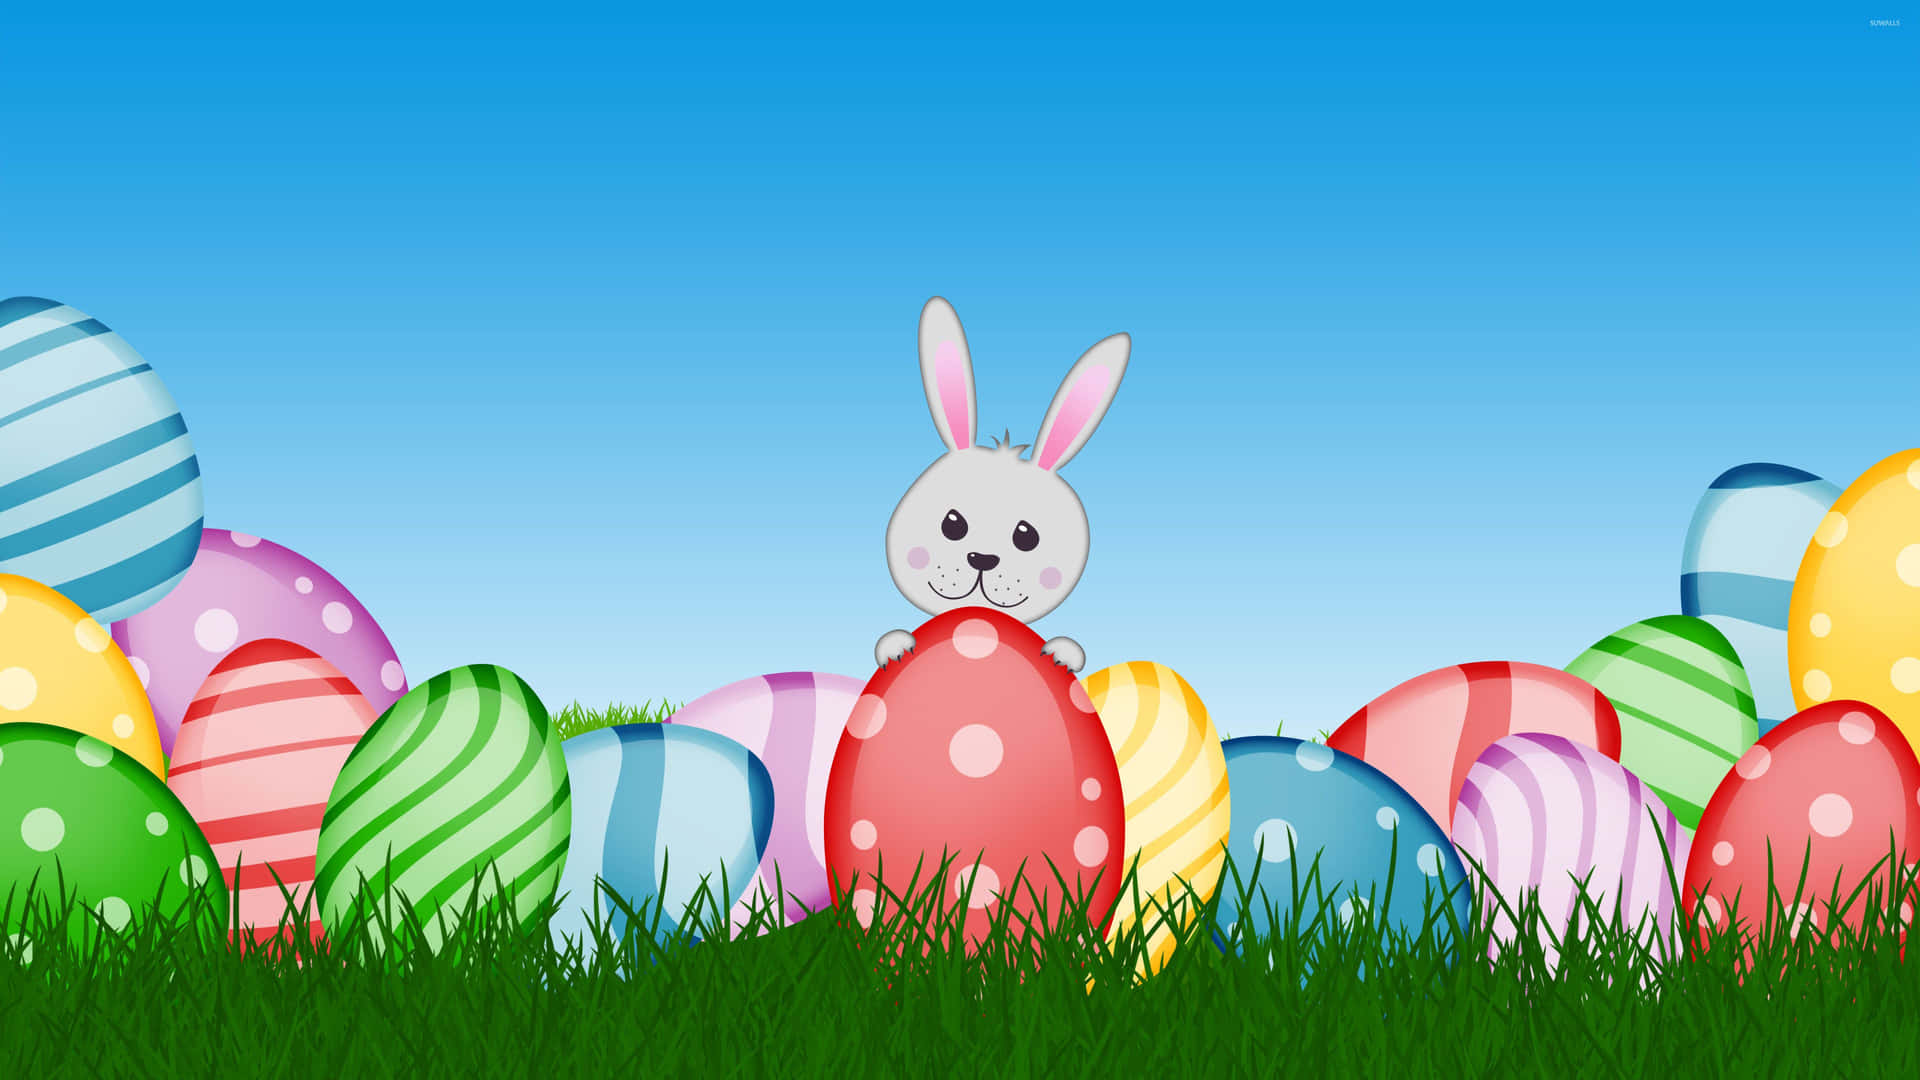 Joyful Easter Bunny Amid Festive Decorations